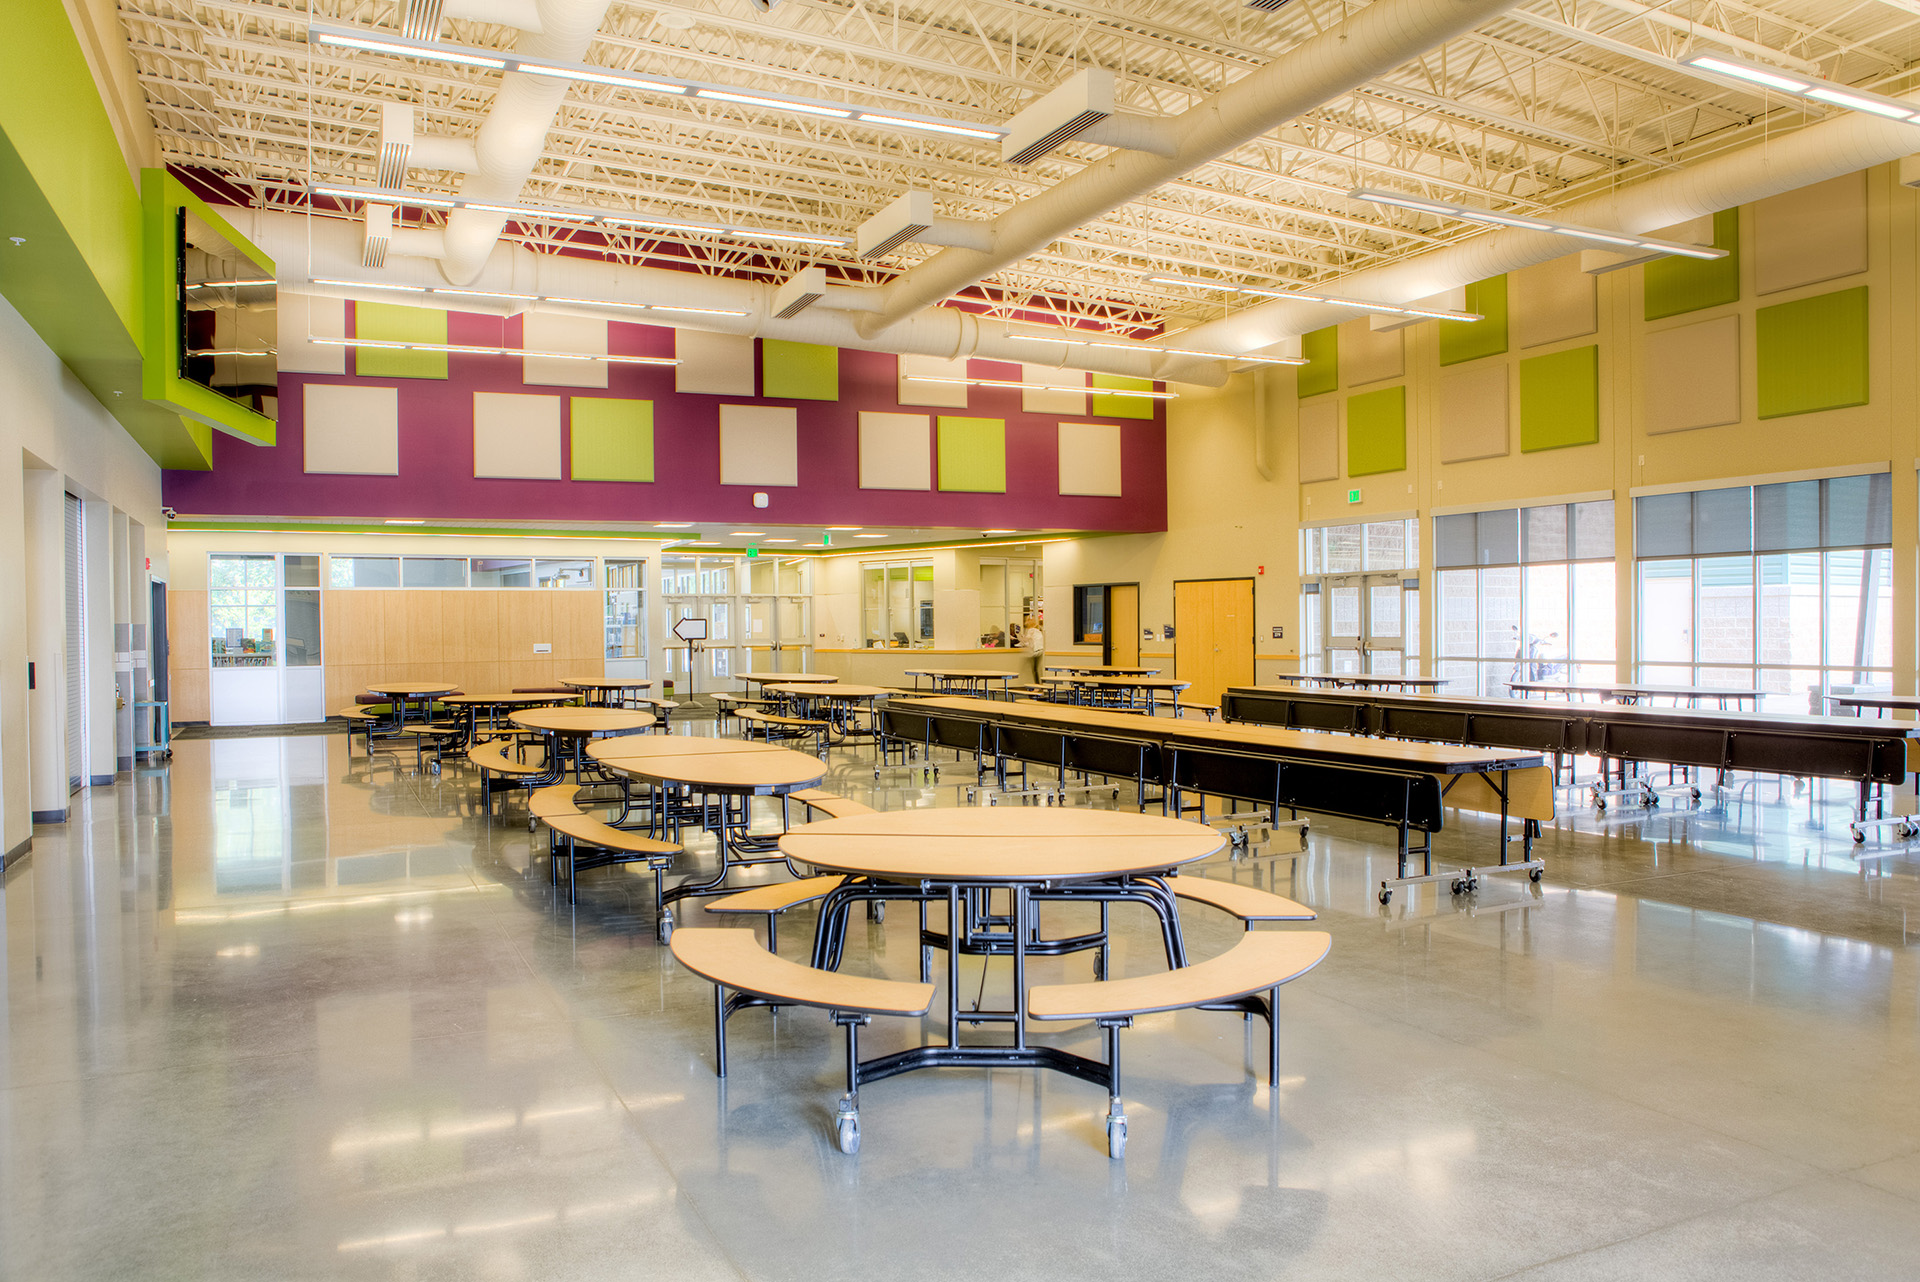 Davis Elementary Cafeteria